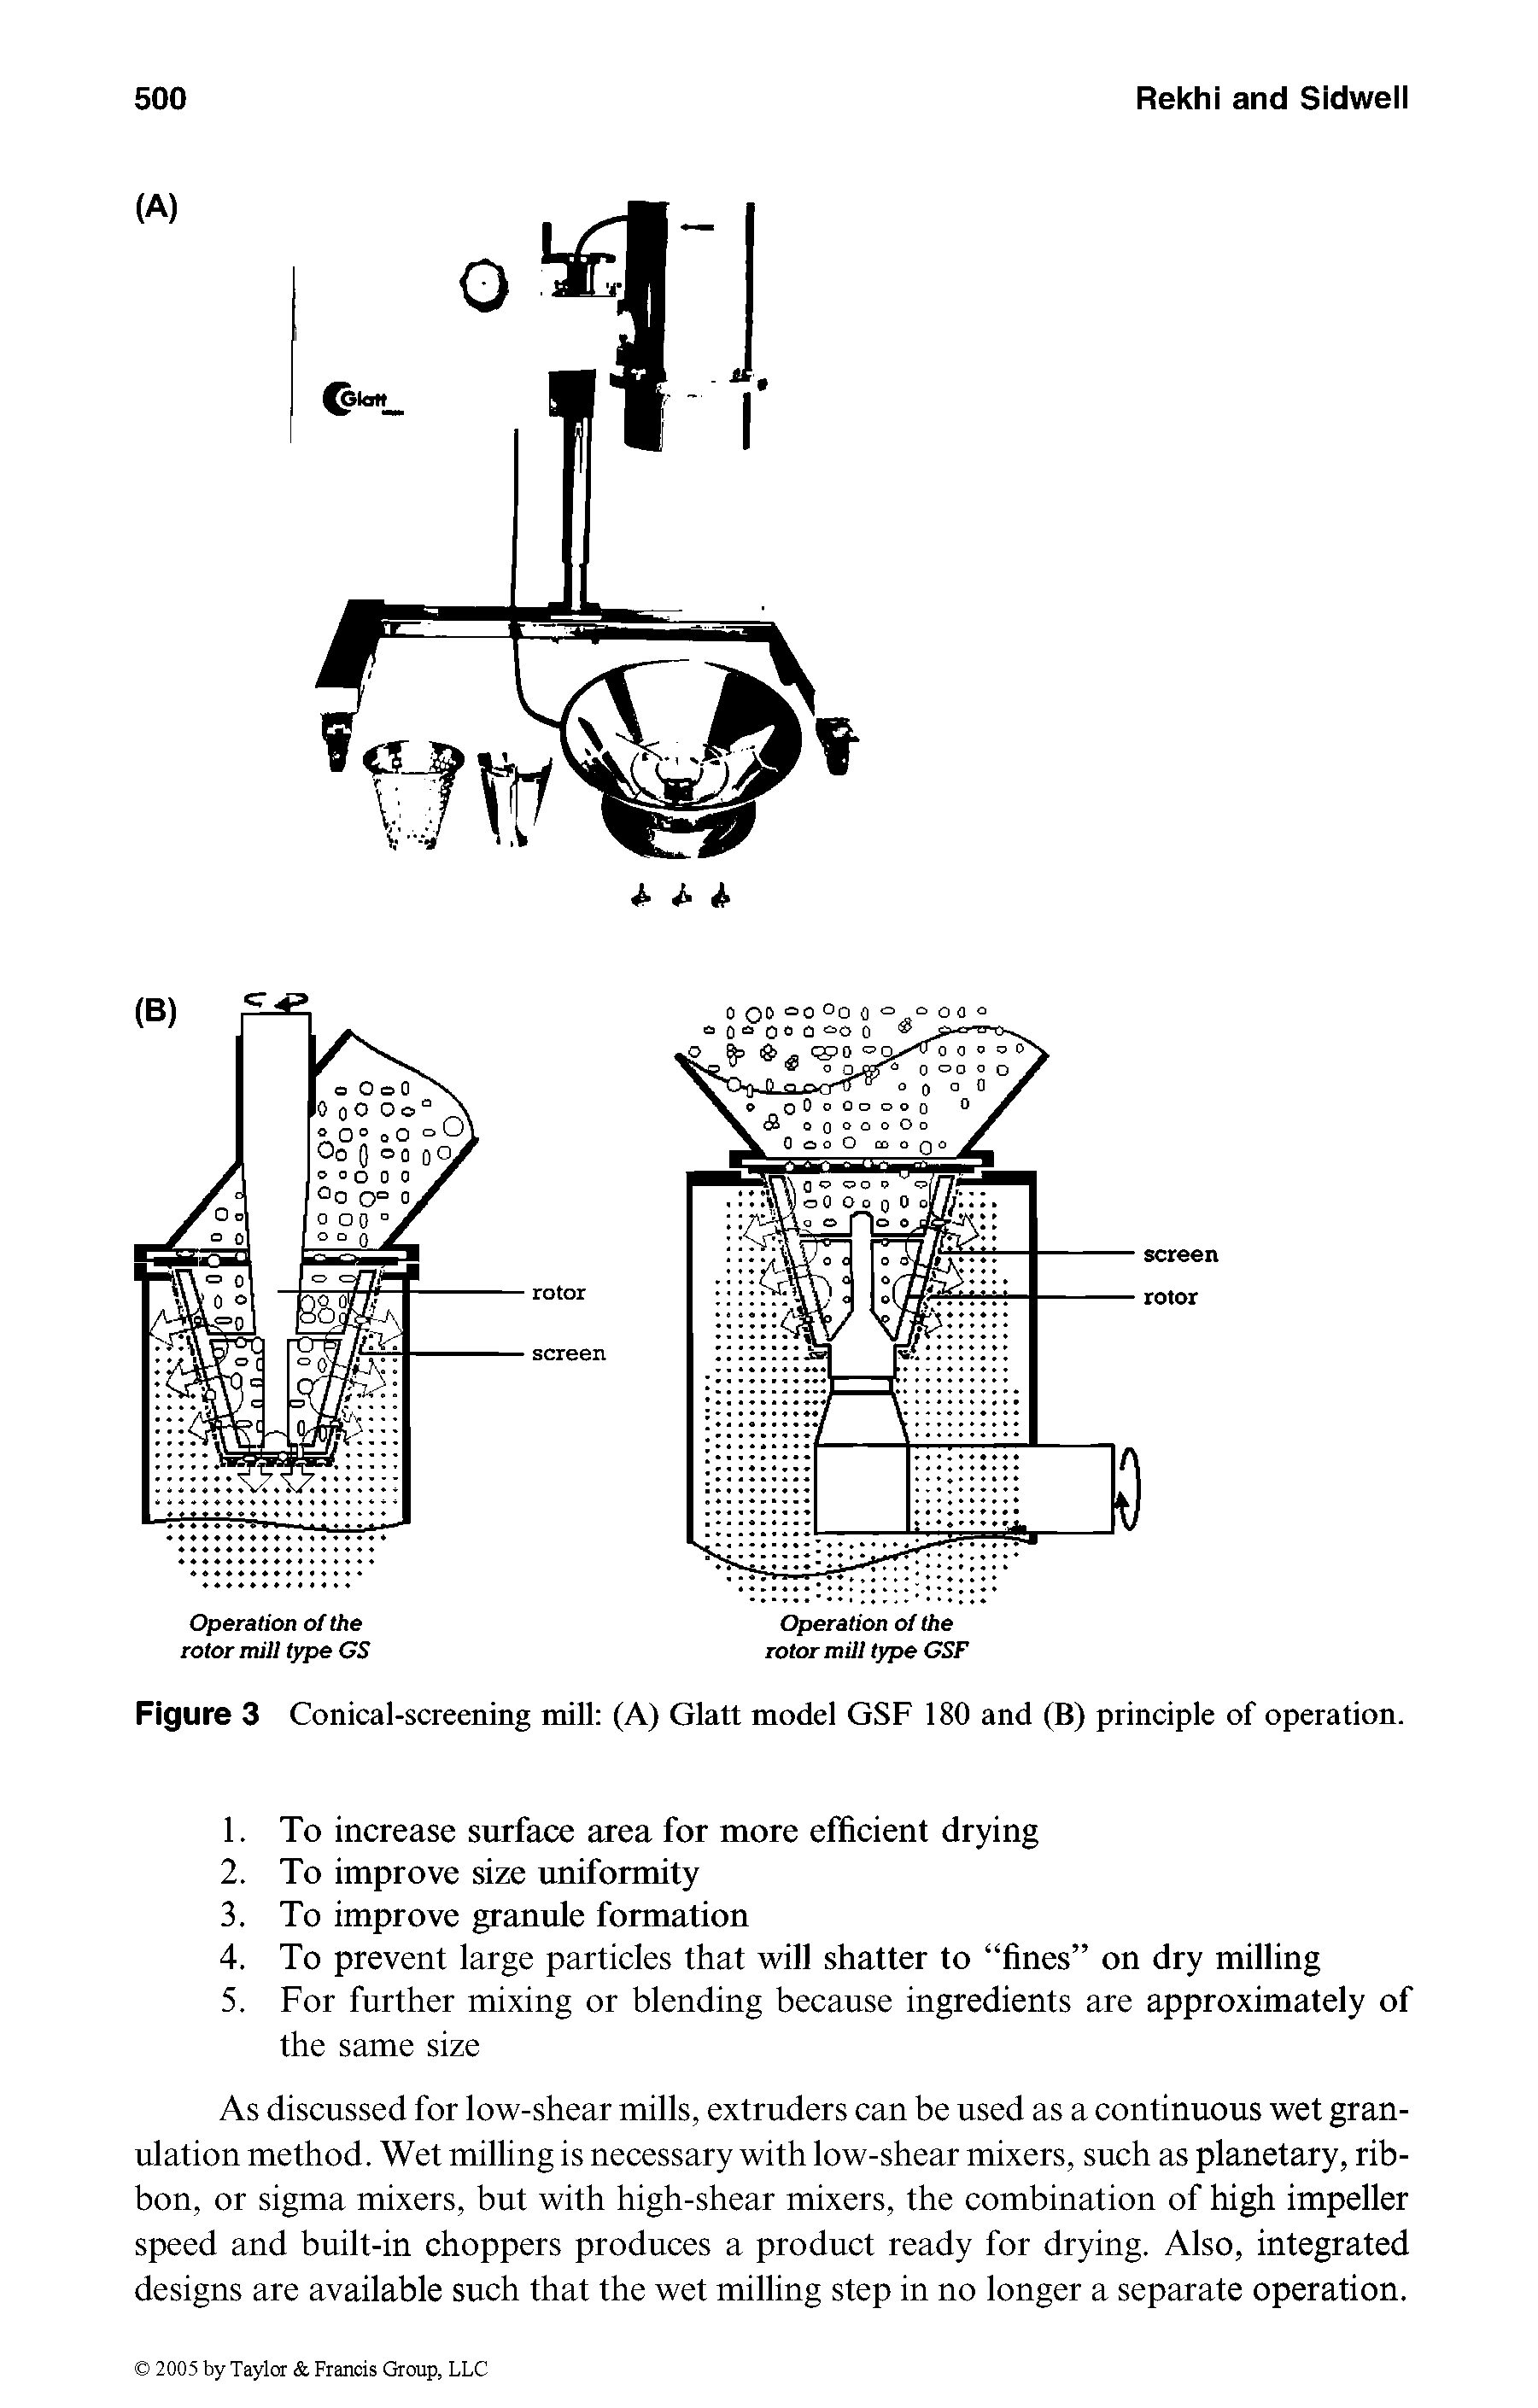 Figure 3 Conical-screening mill (A) Glatt model GSF 180 and (B) principle of operation.